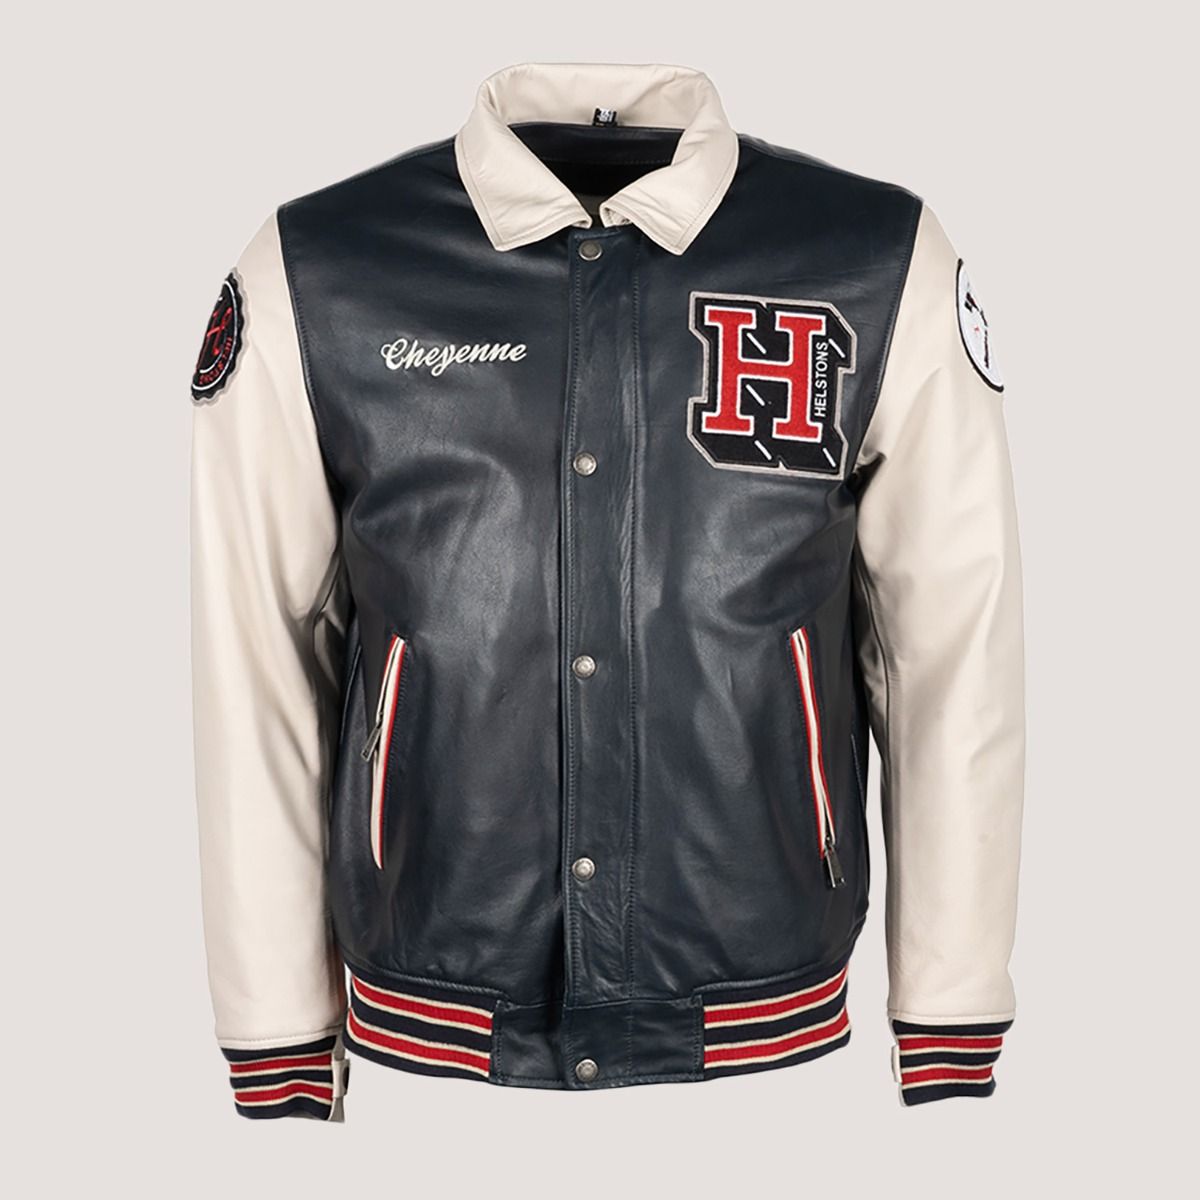 Image of Helstons CHEYENNE Cuir Rag Jacket Blue Beige Size XL ID 3662136089297